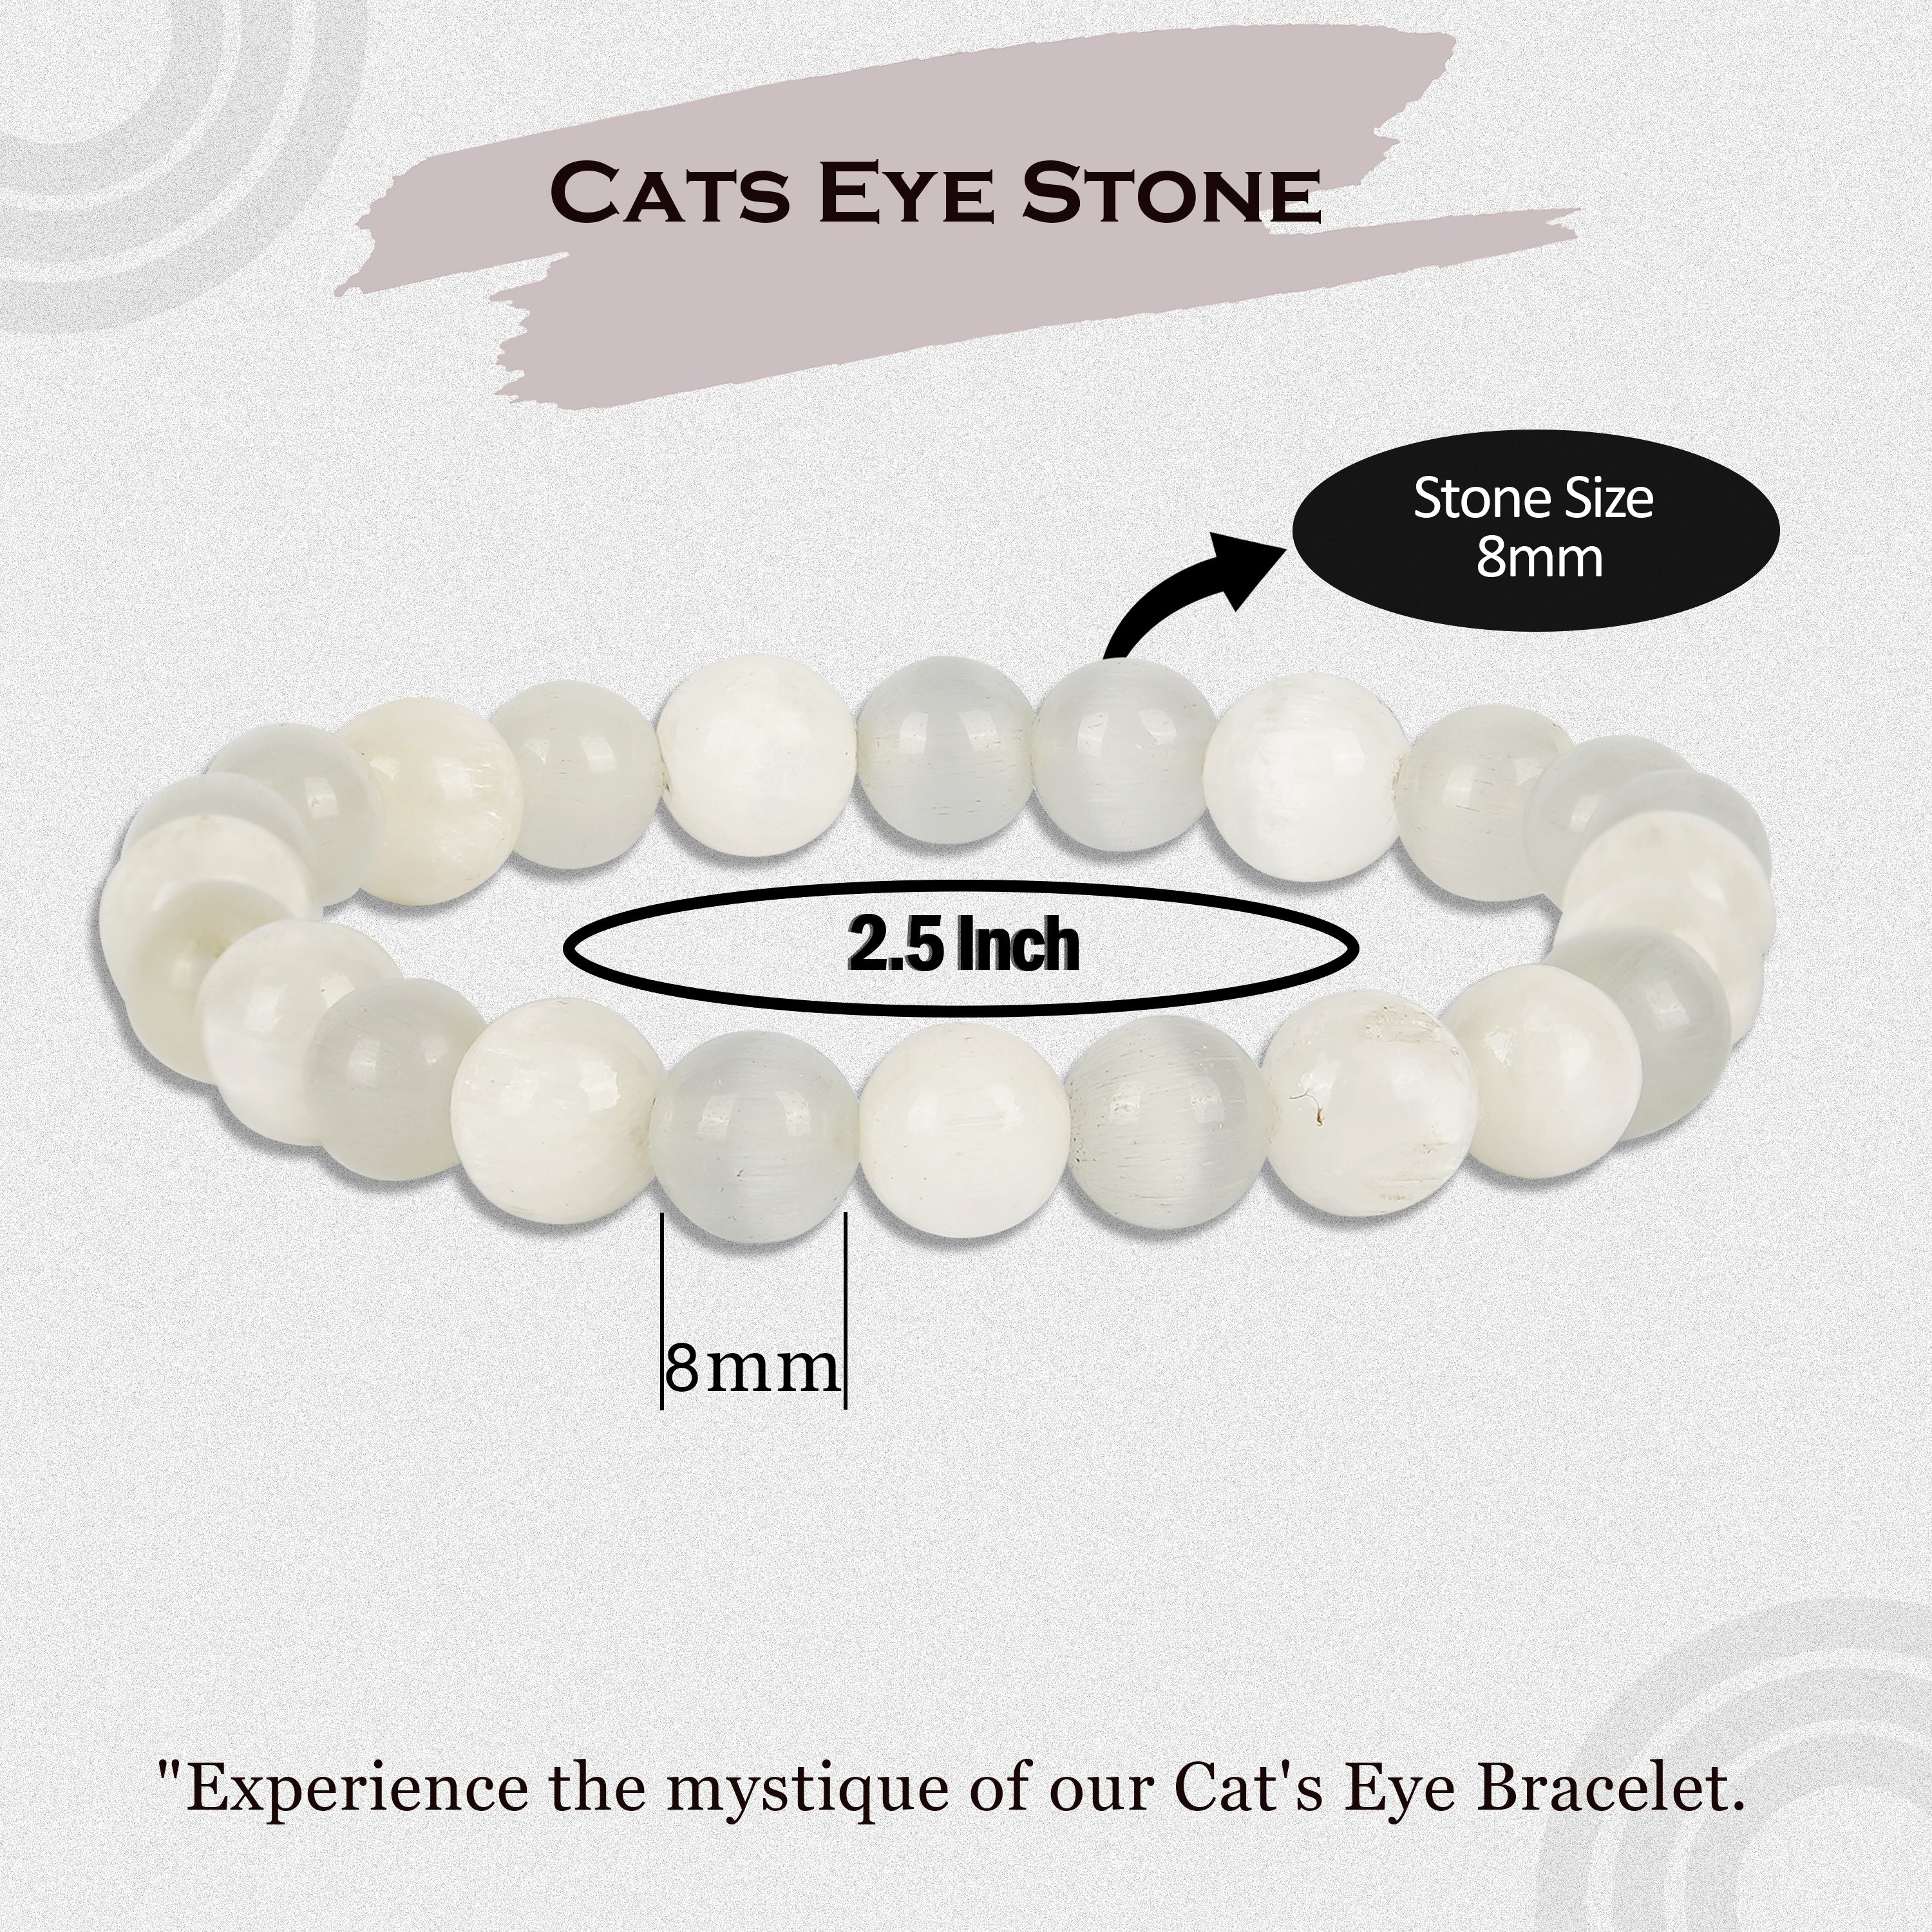 Cat's eye bracelet